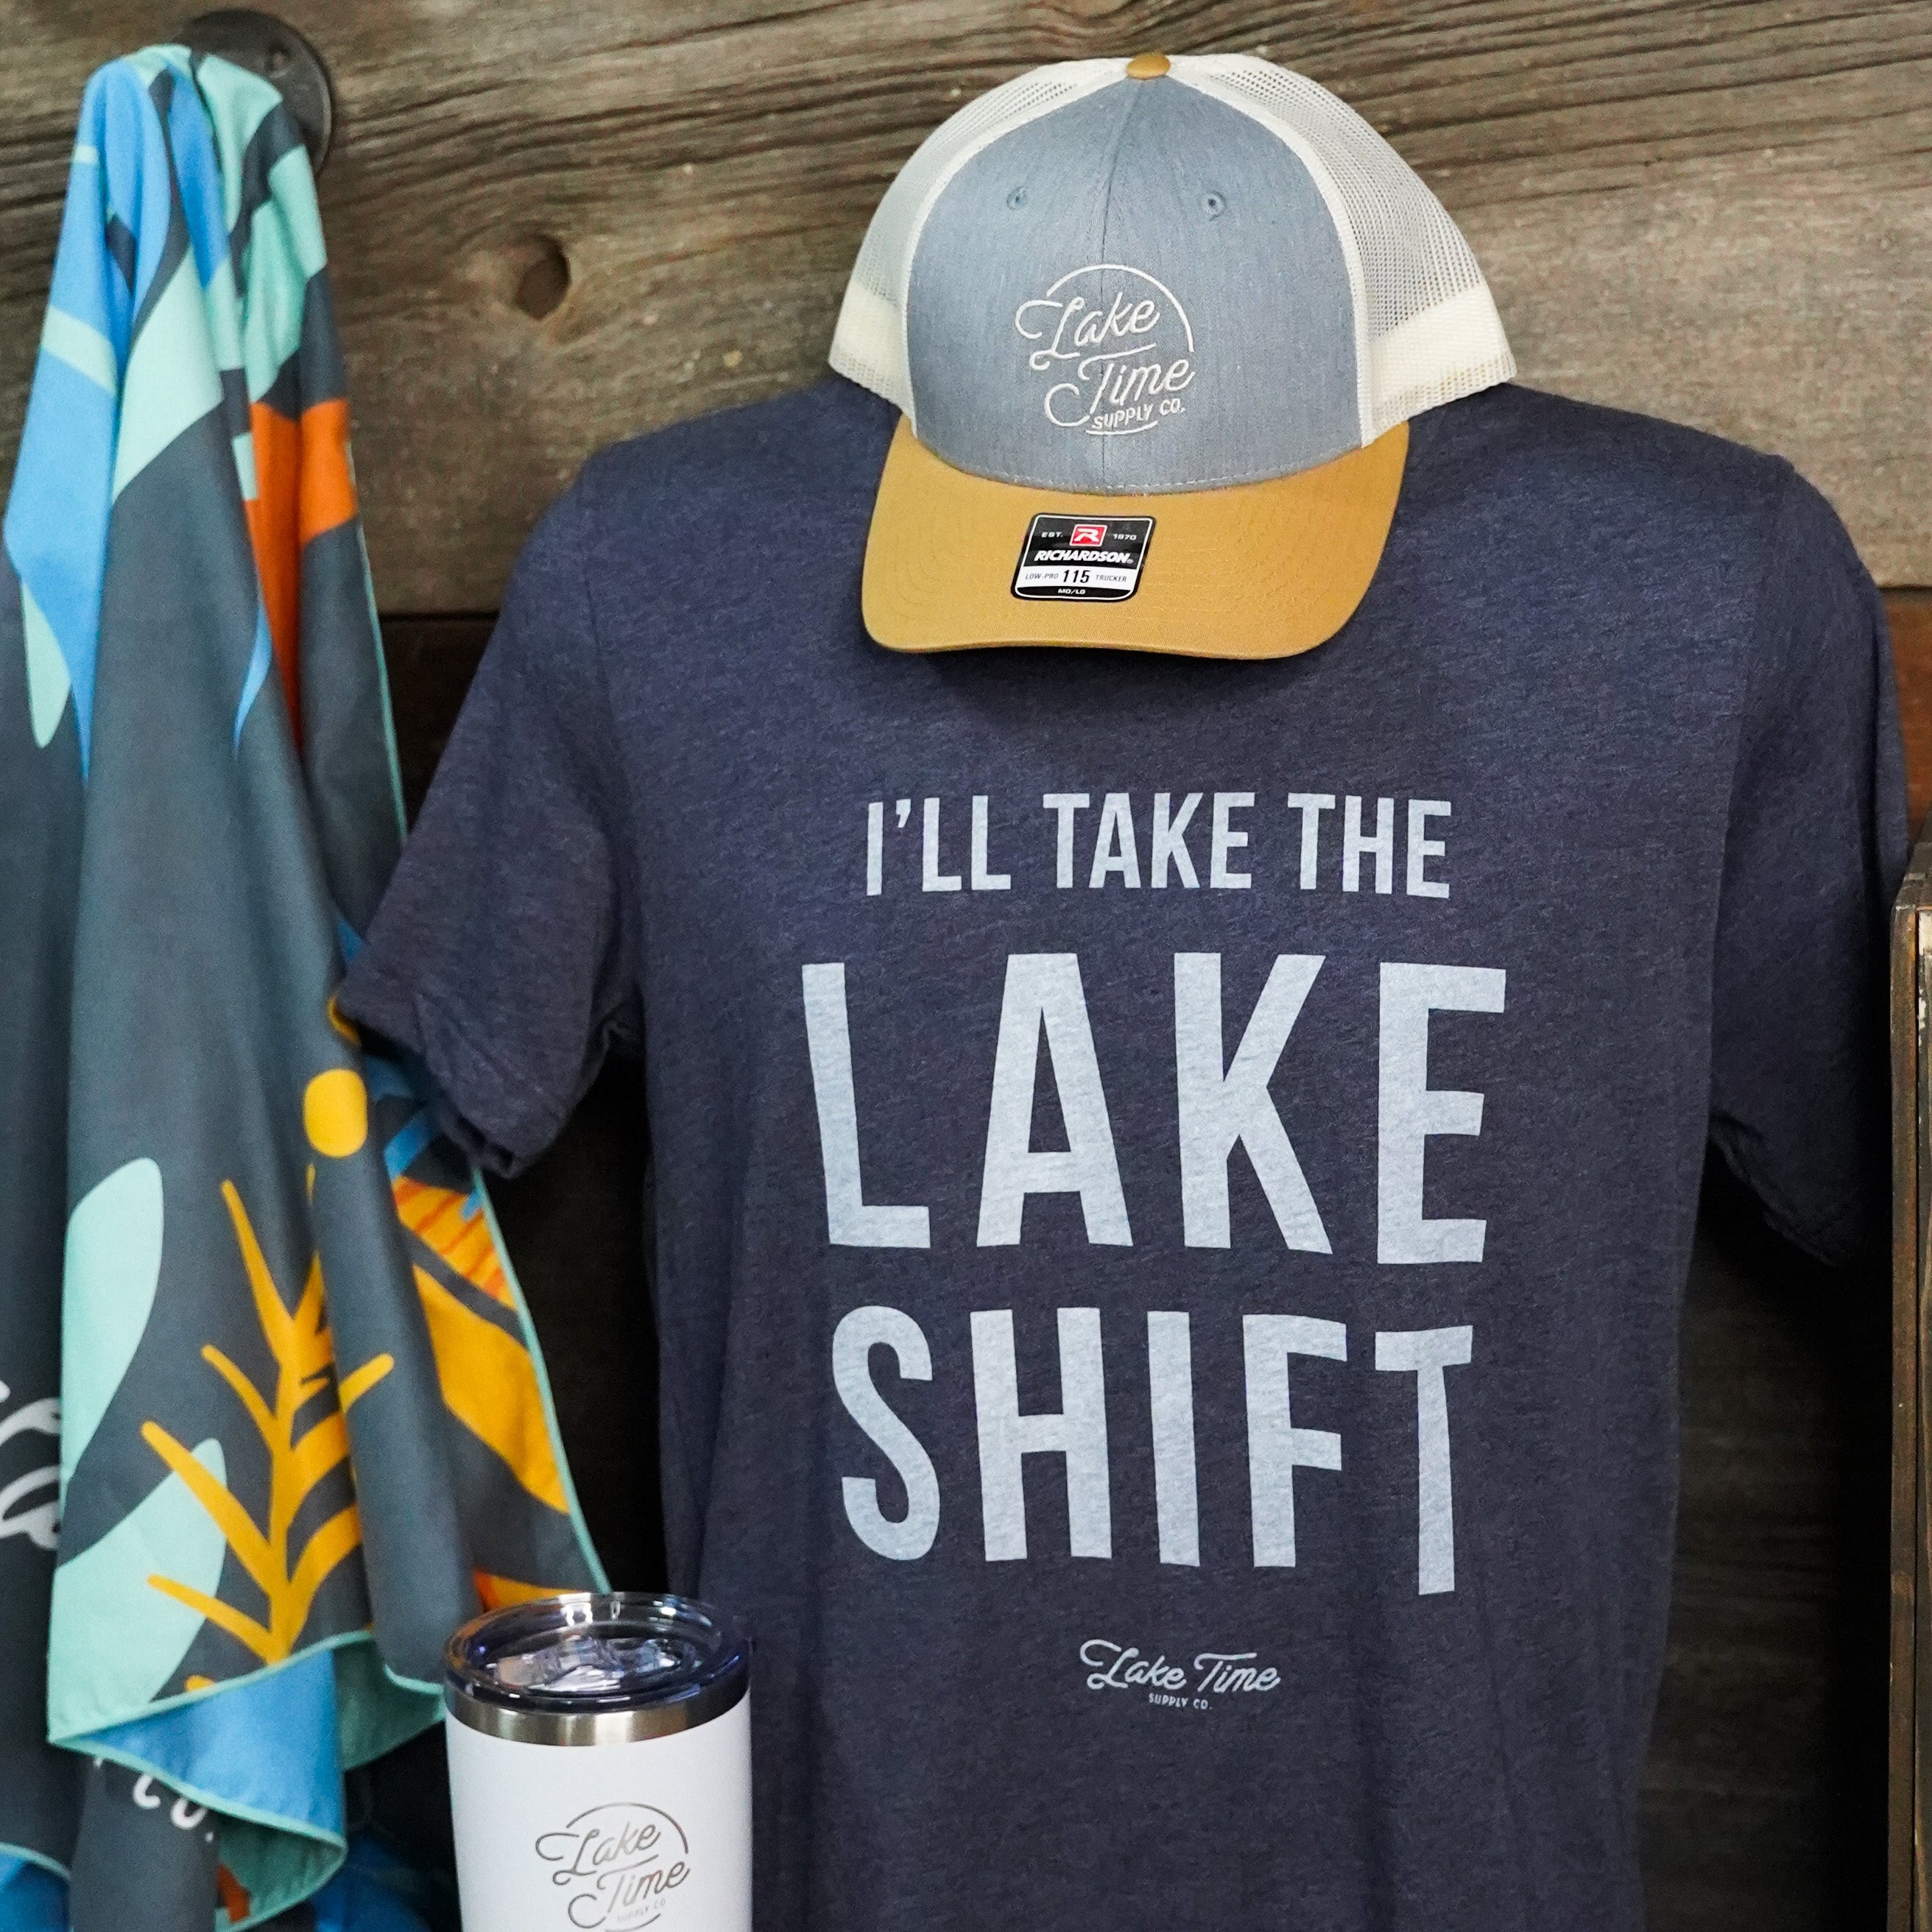 – Shift Supply Lake Lake Time (S-4XL) Tee